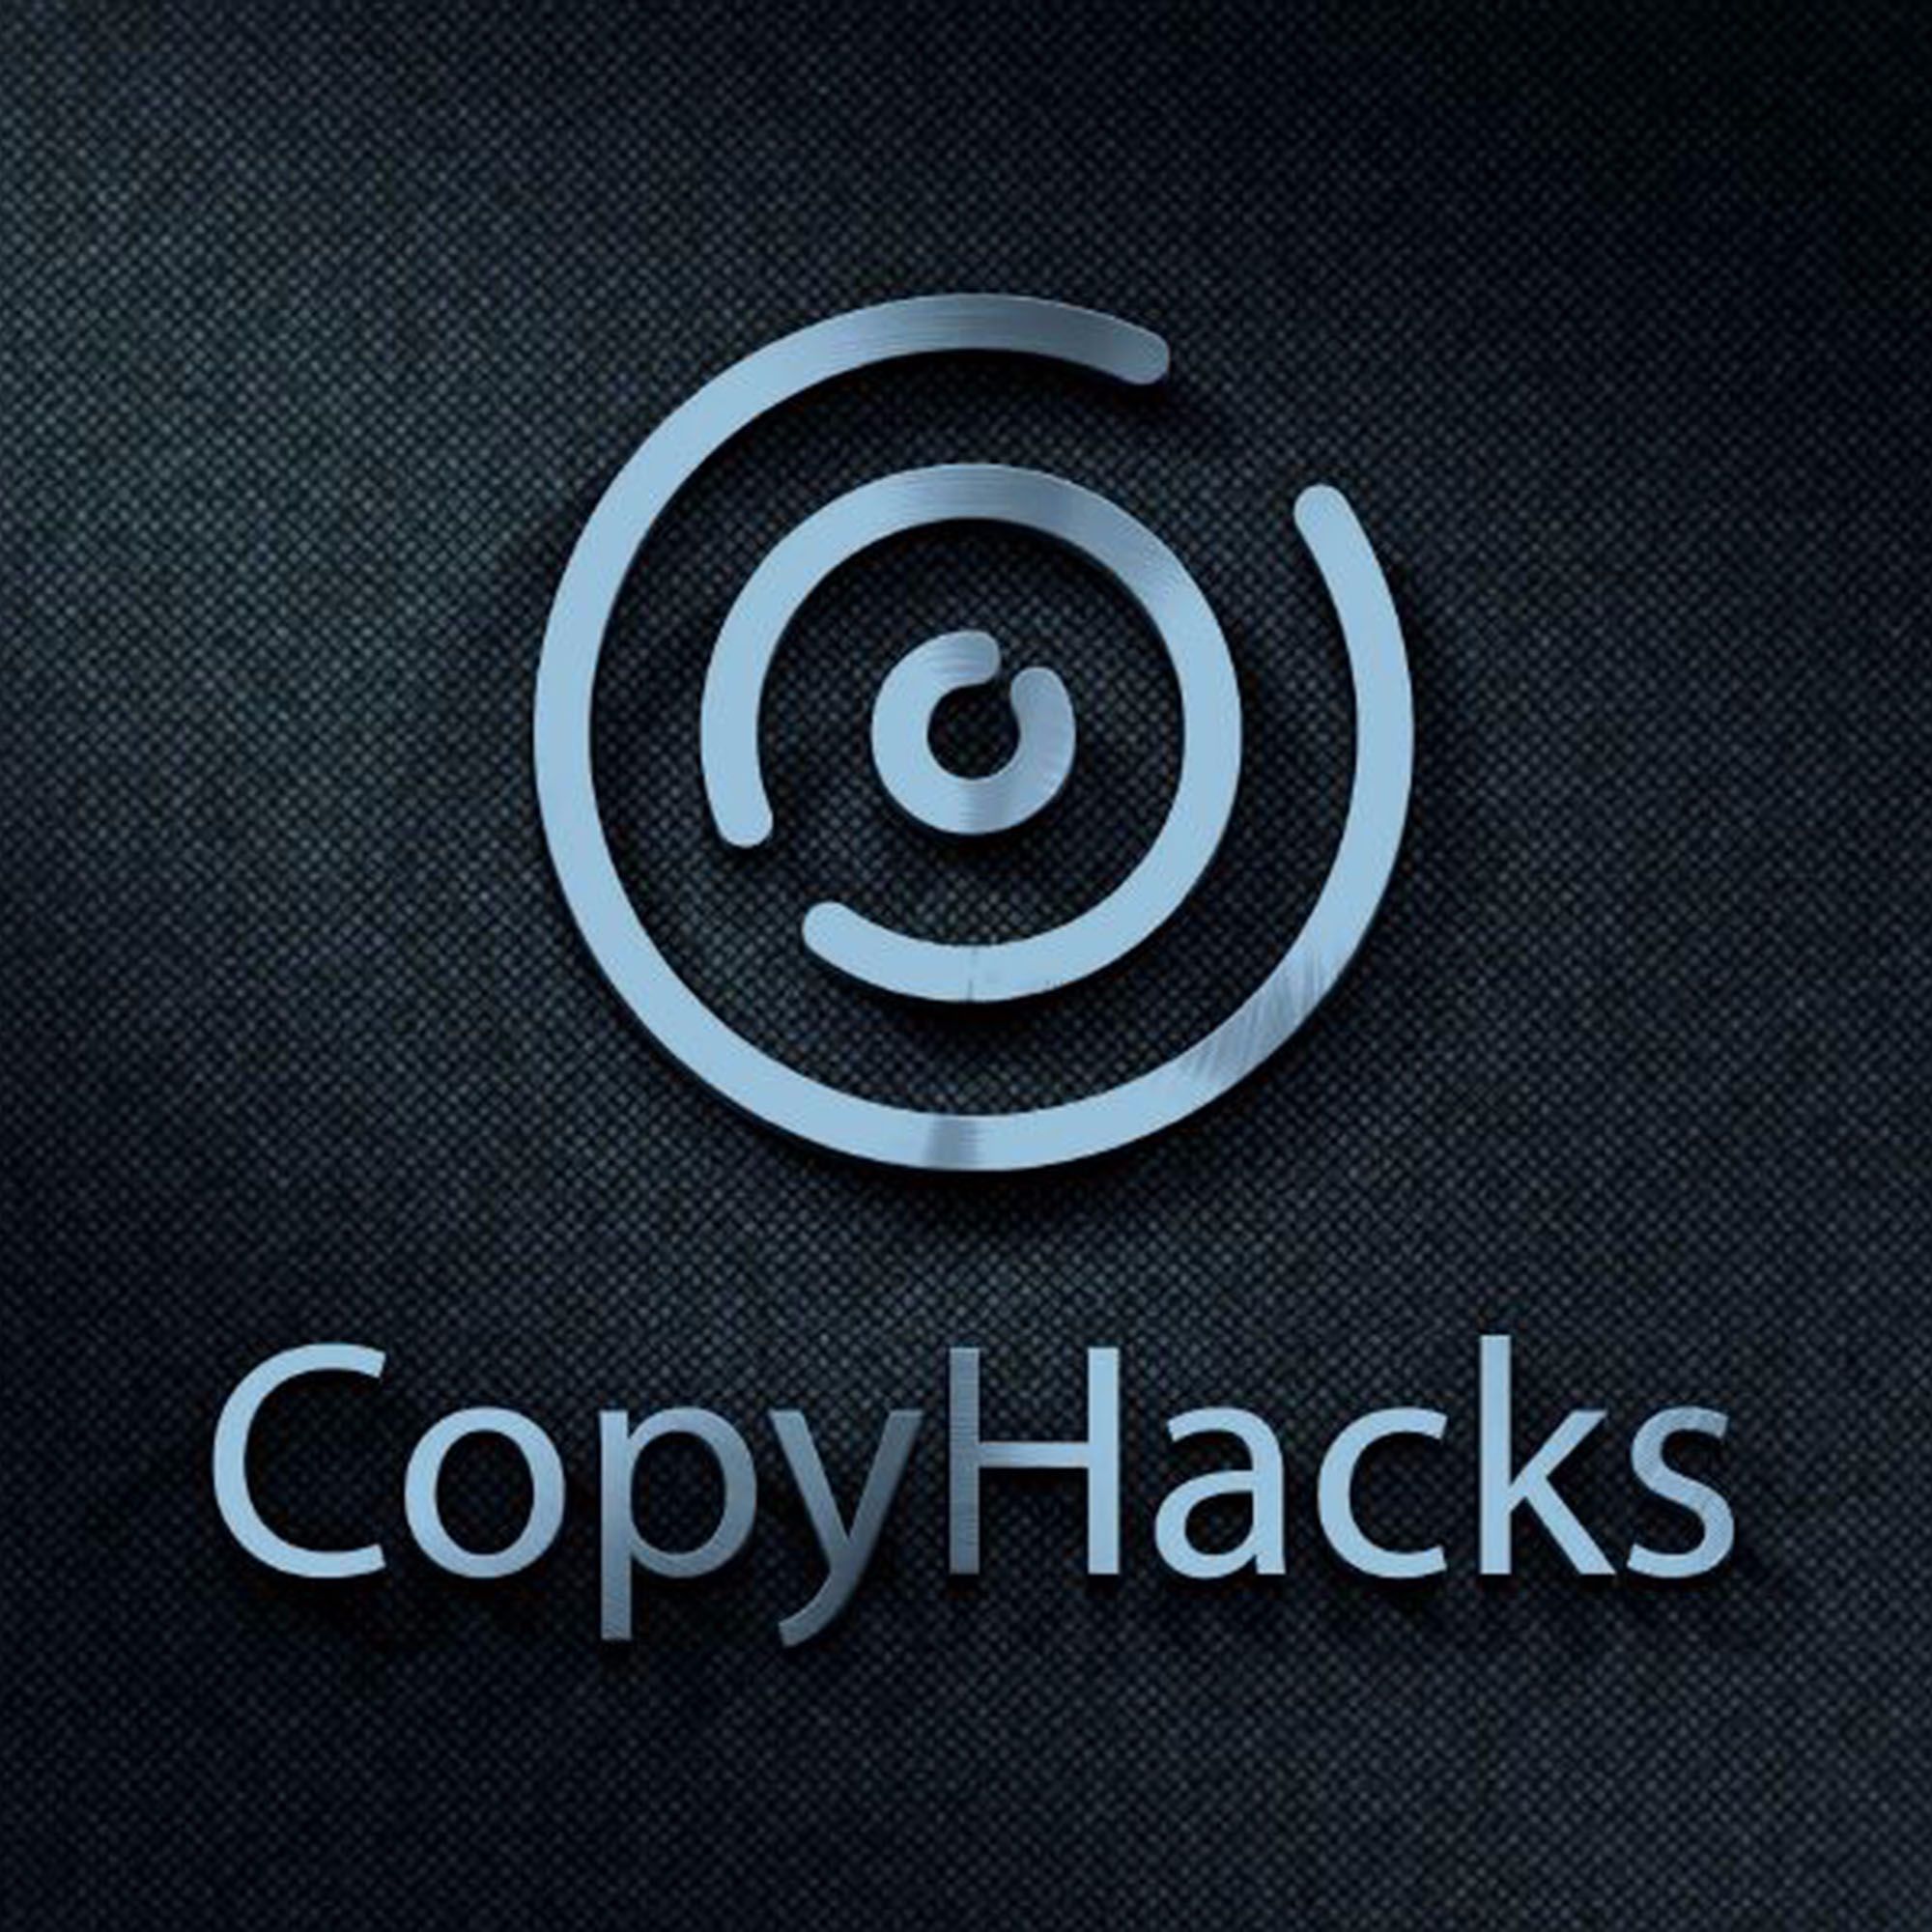 CopyHacks Podcast